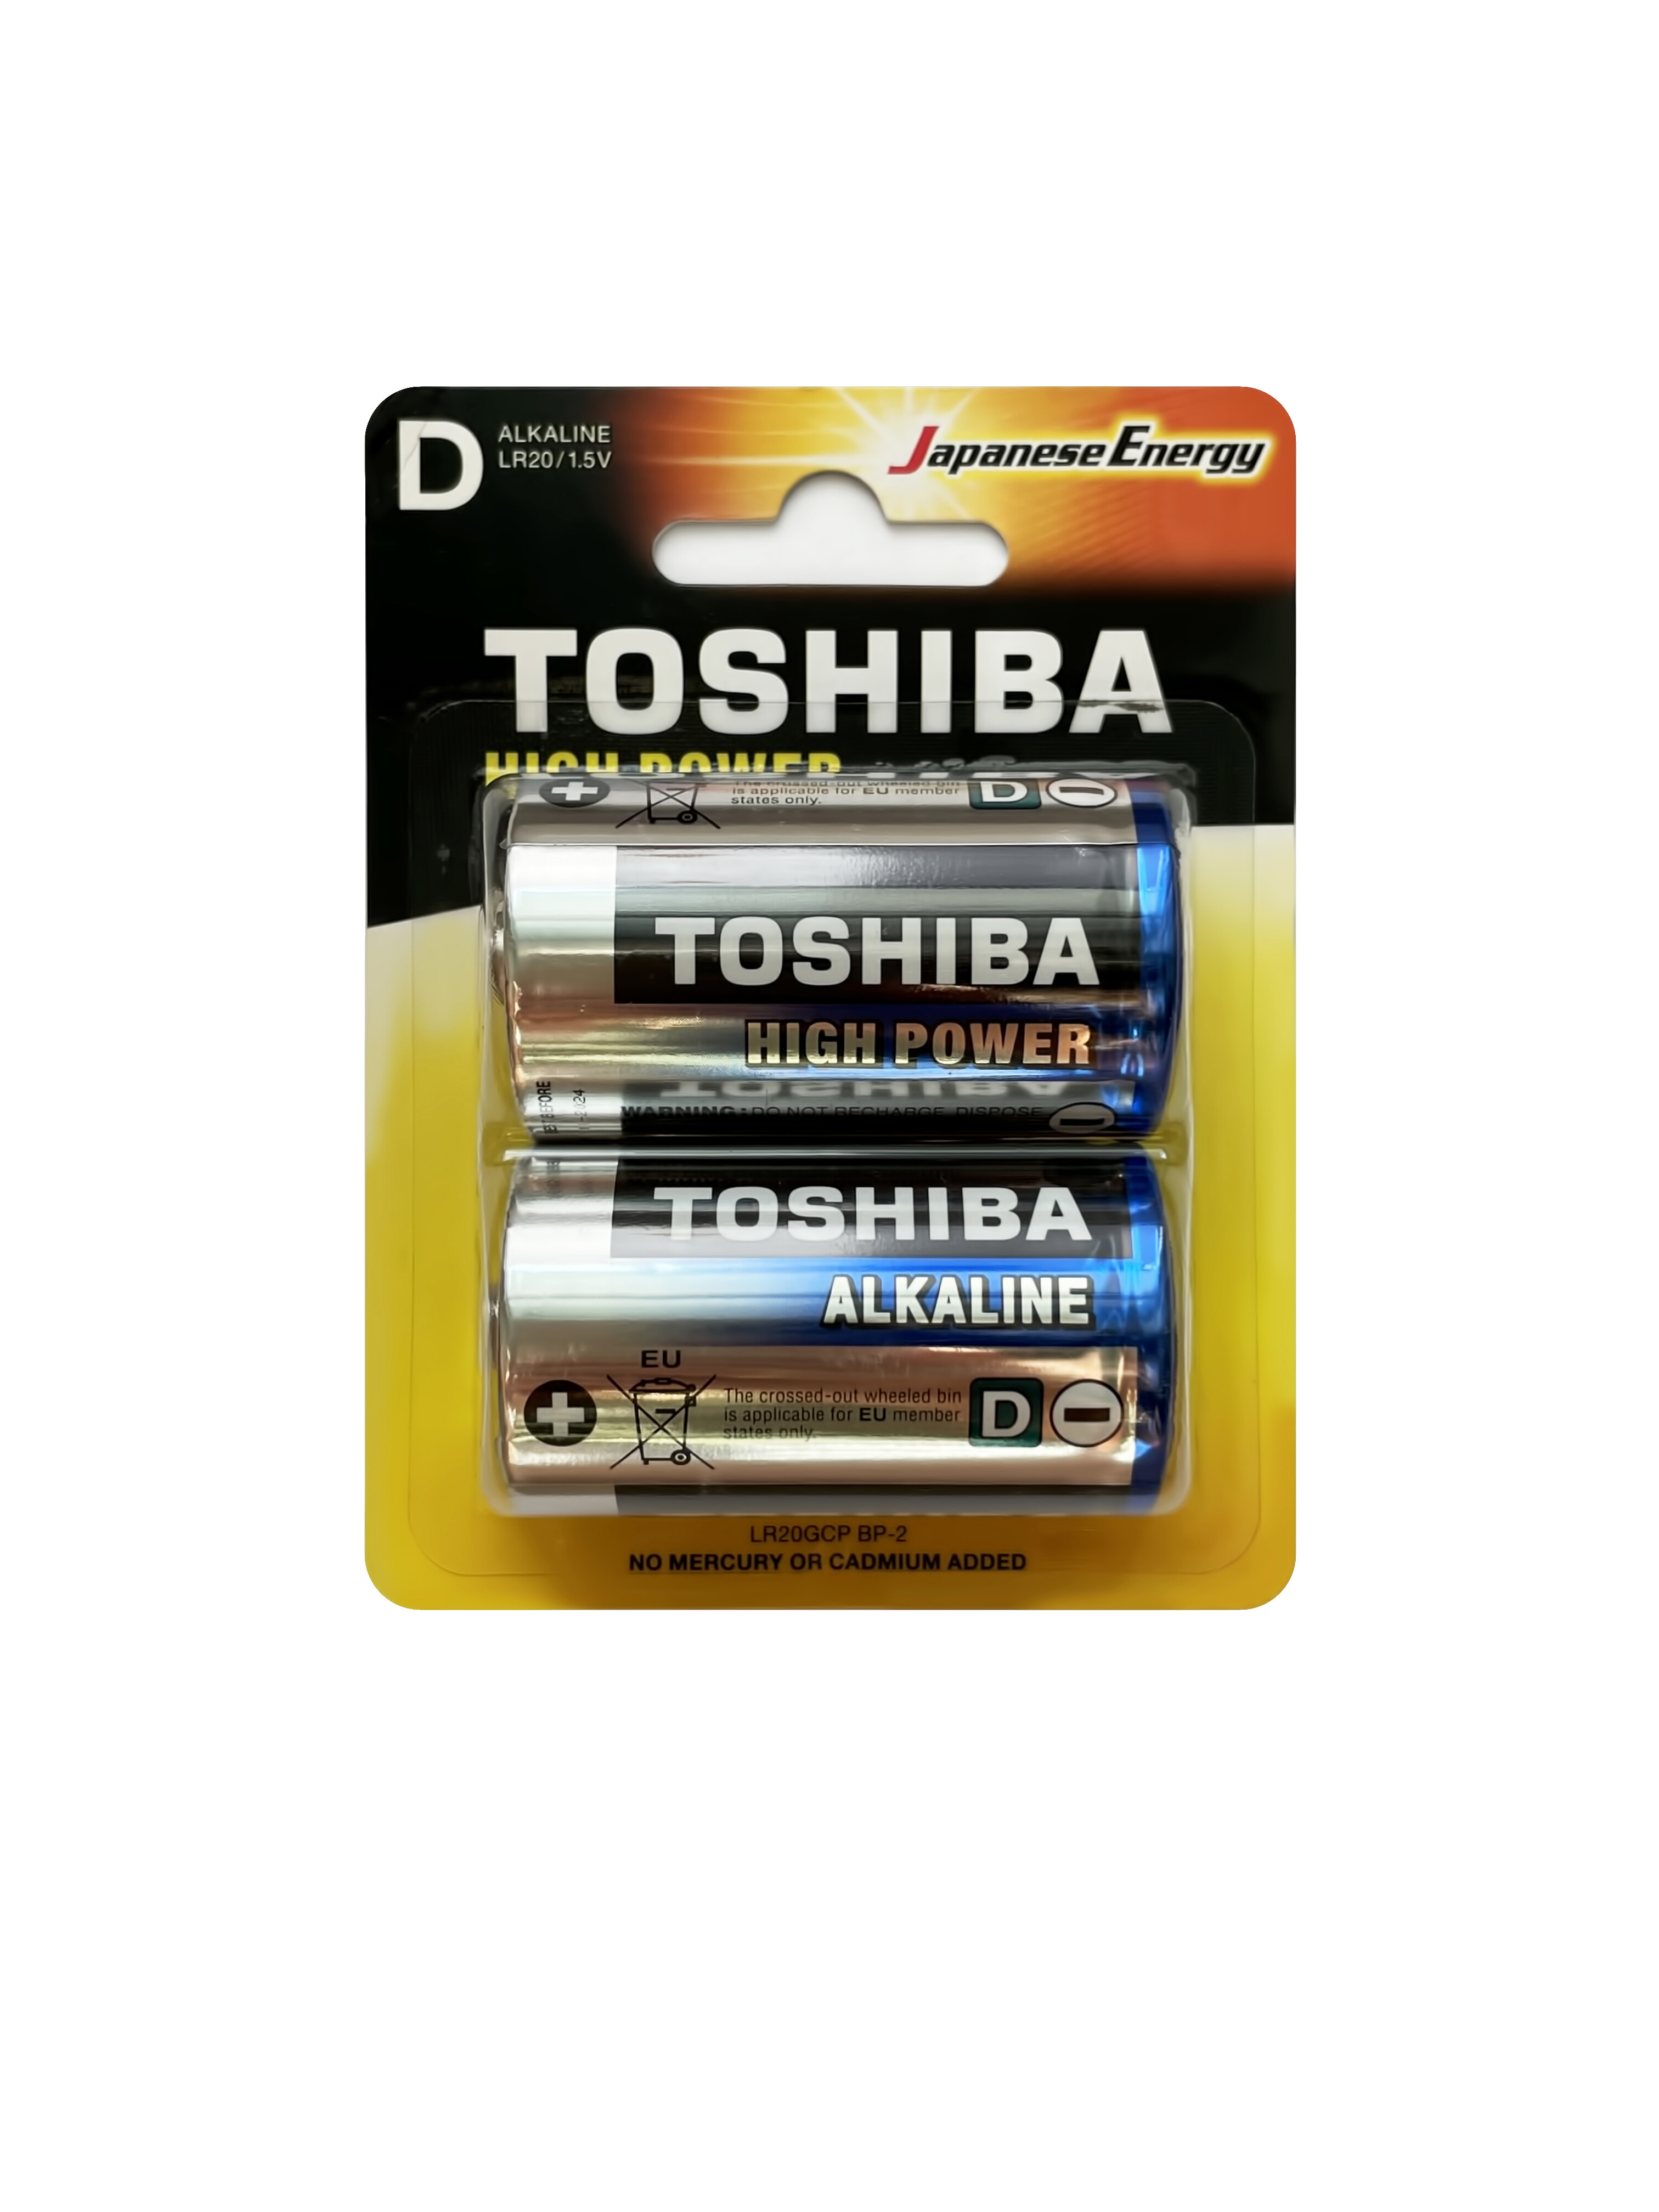 Батарейки Toshiba LR20 щелочные (alkaline) БОЧКА High Power (2шт) D 1,5V батарейки toshiba lr20 щелочные alkaline бочка high power 2шт d 1 5v